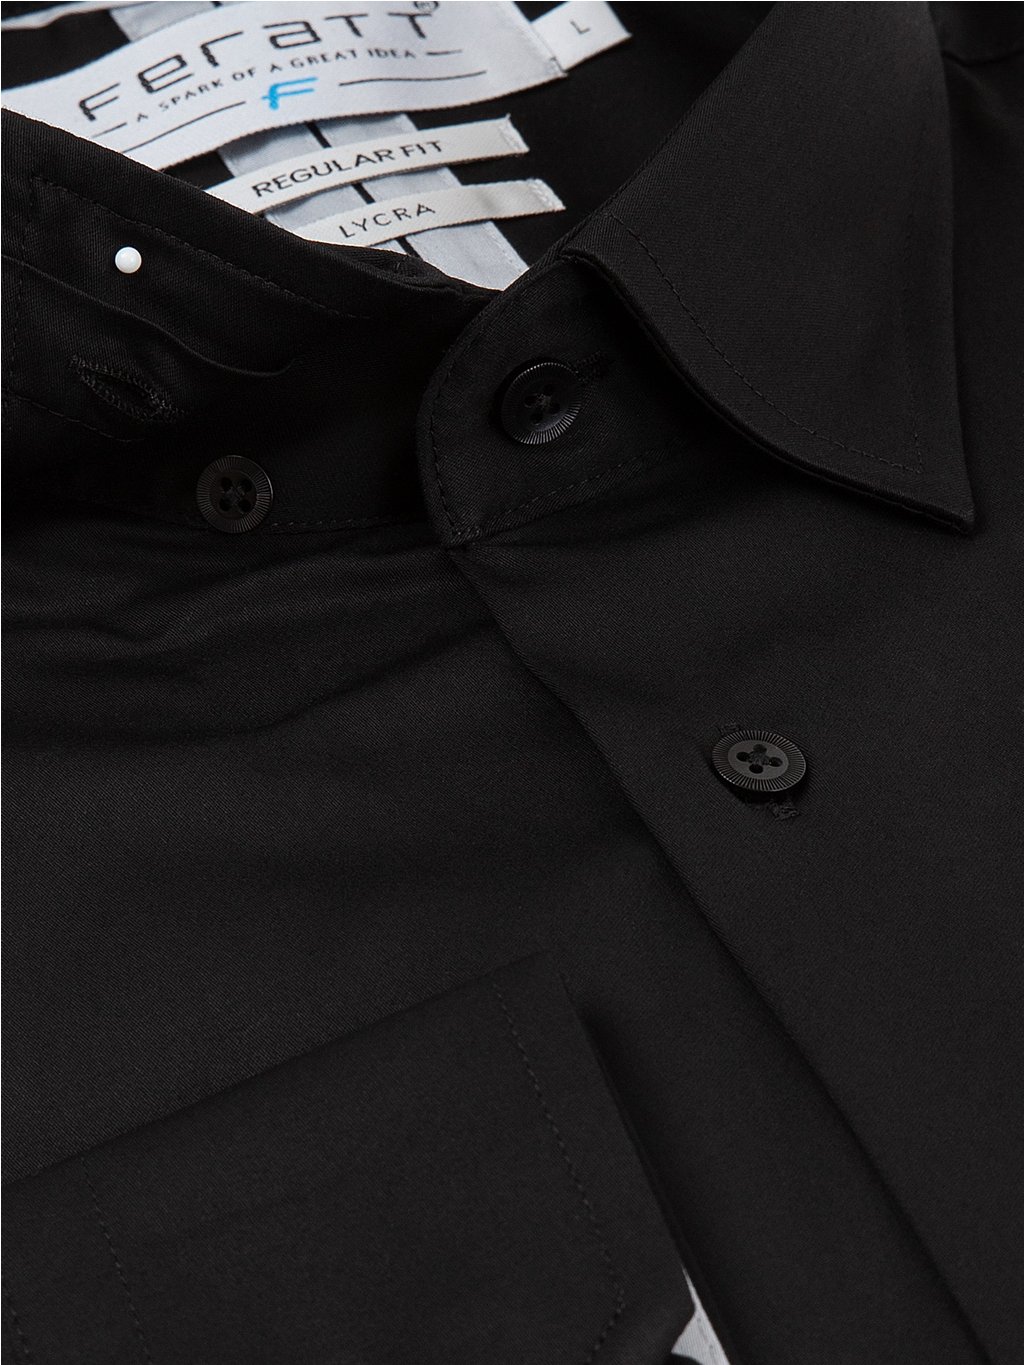 Pánská košile FERATT black regular stretch